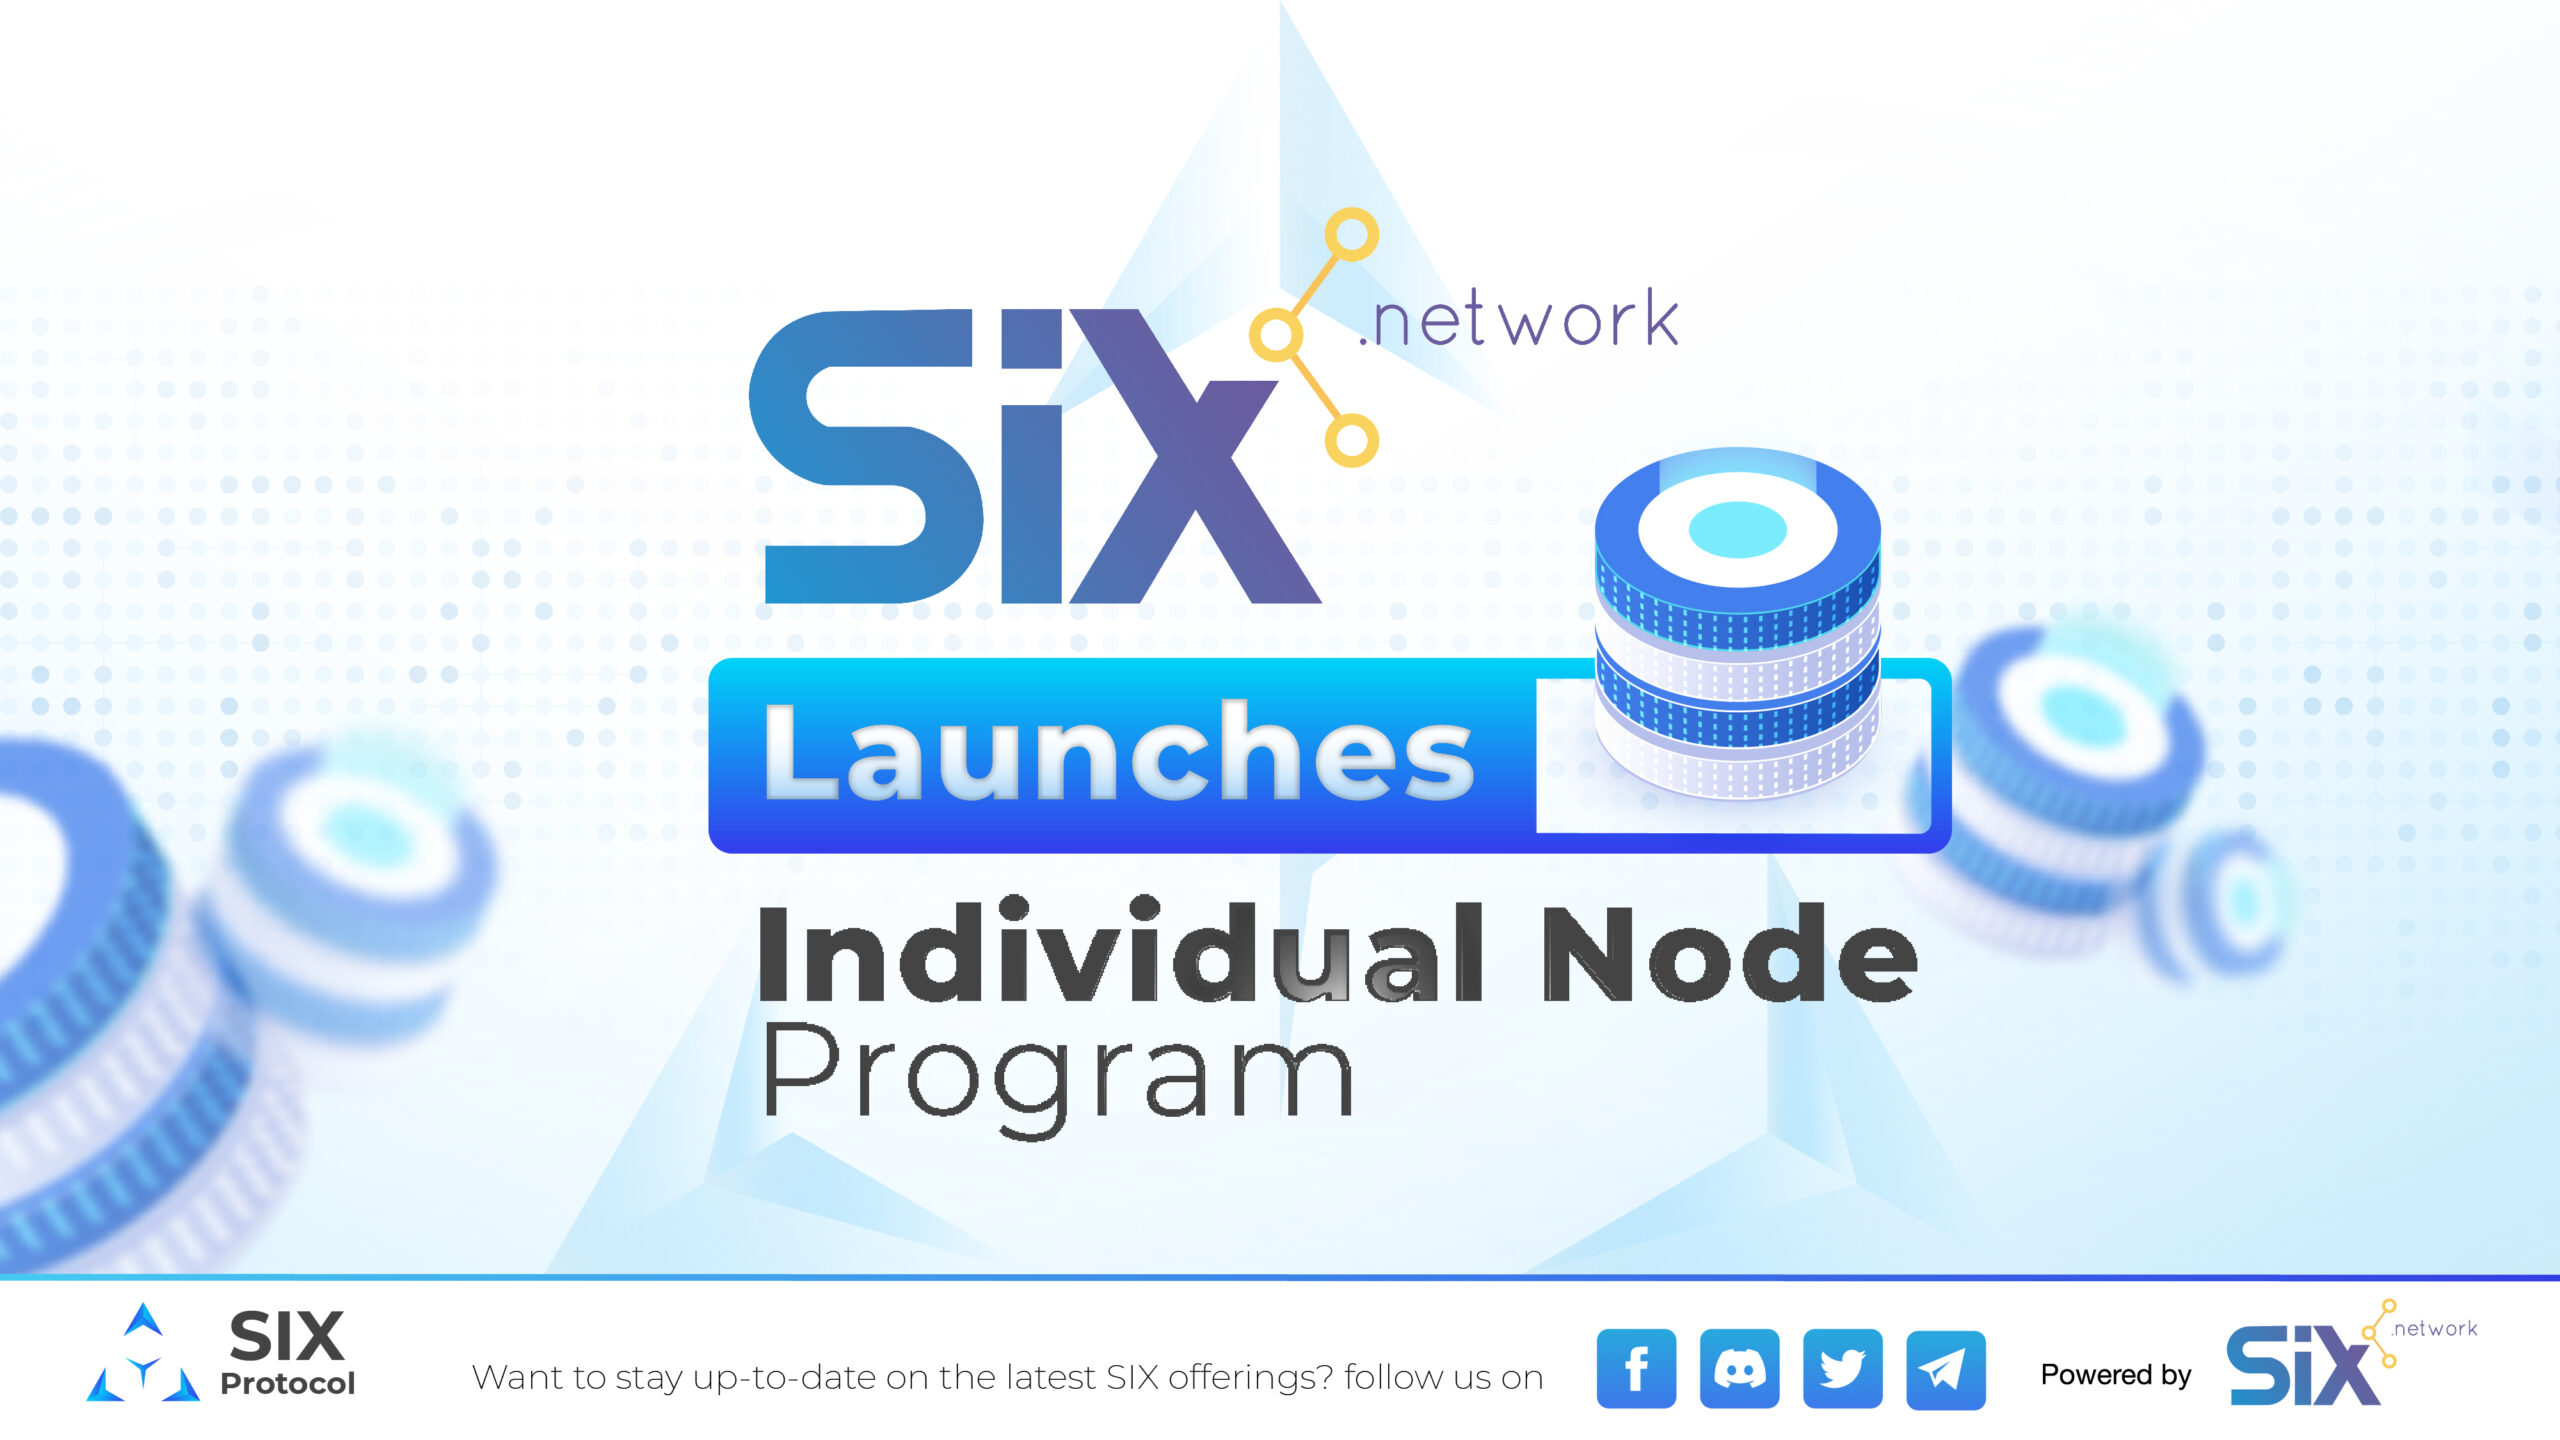 SIX Network Launches Individual Node Program